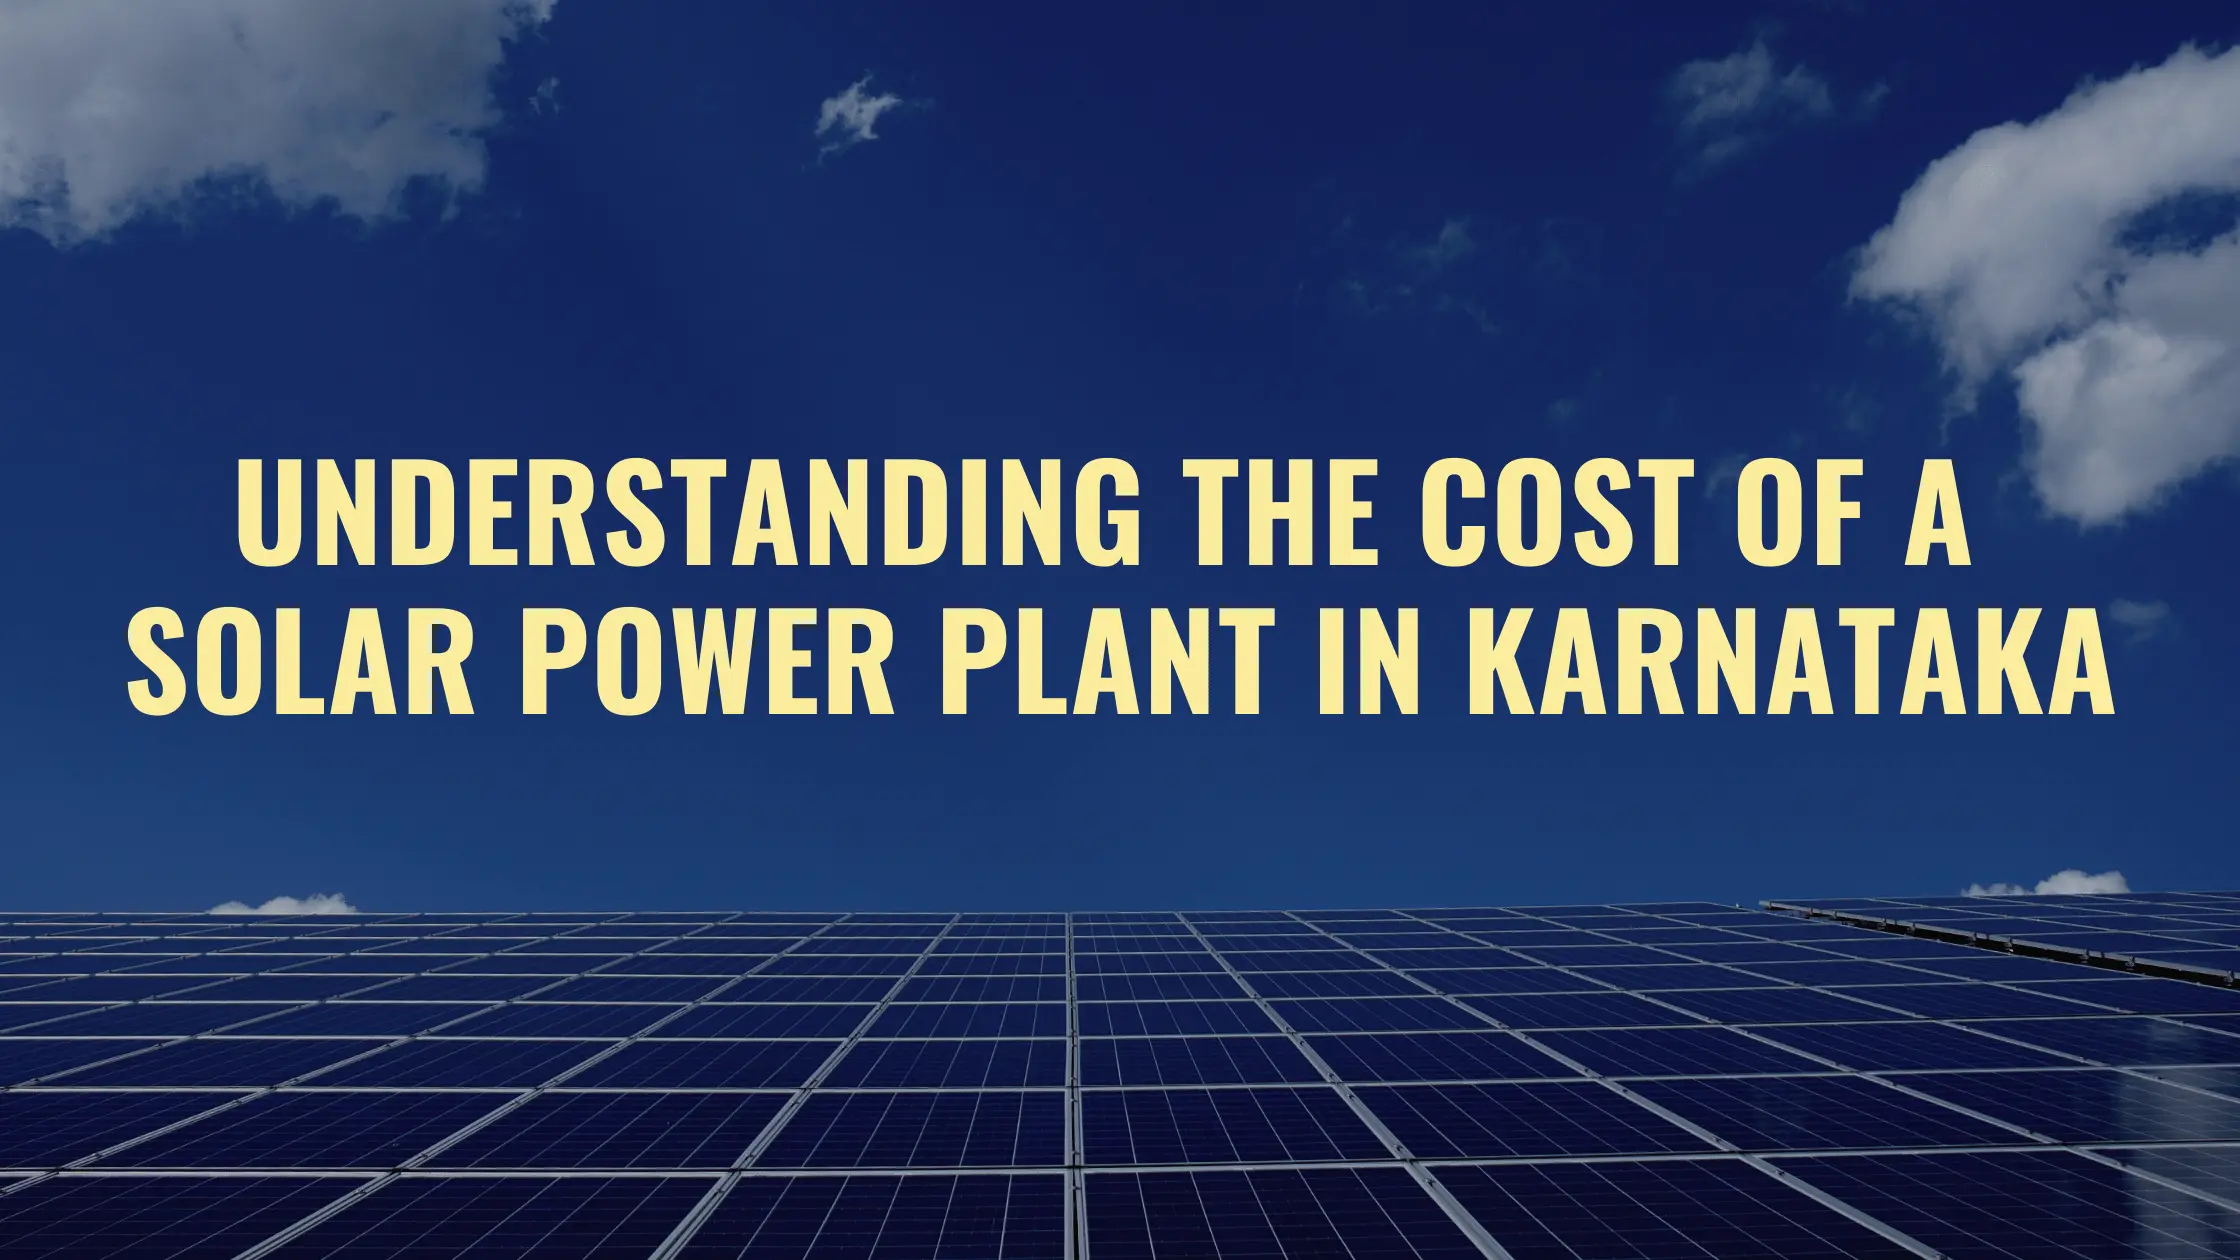 bosch solar energy bengaluru karnataka - What is the cost of solar power plant in Karnataka